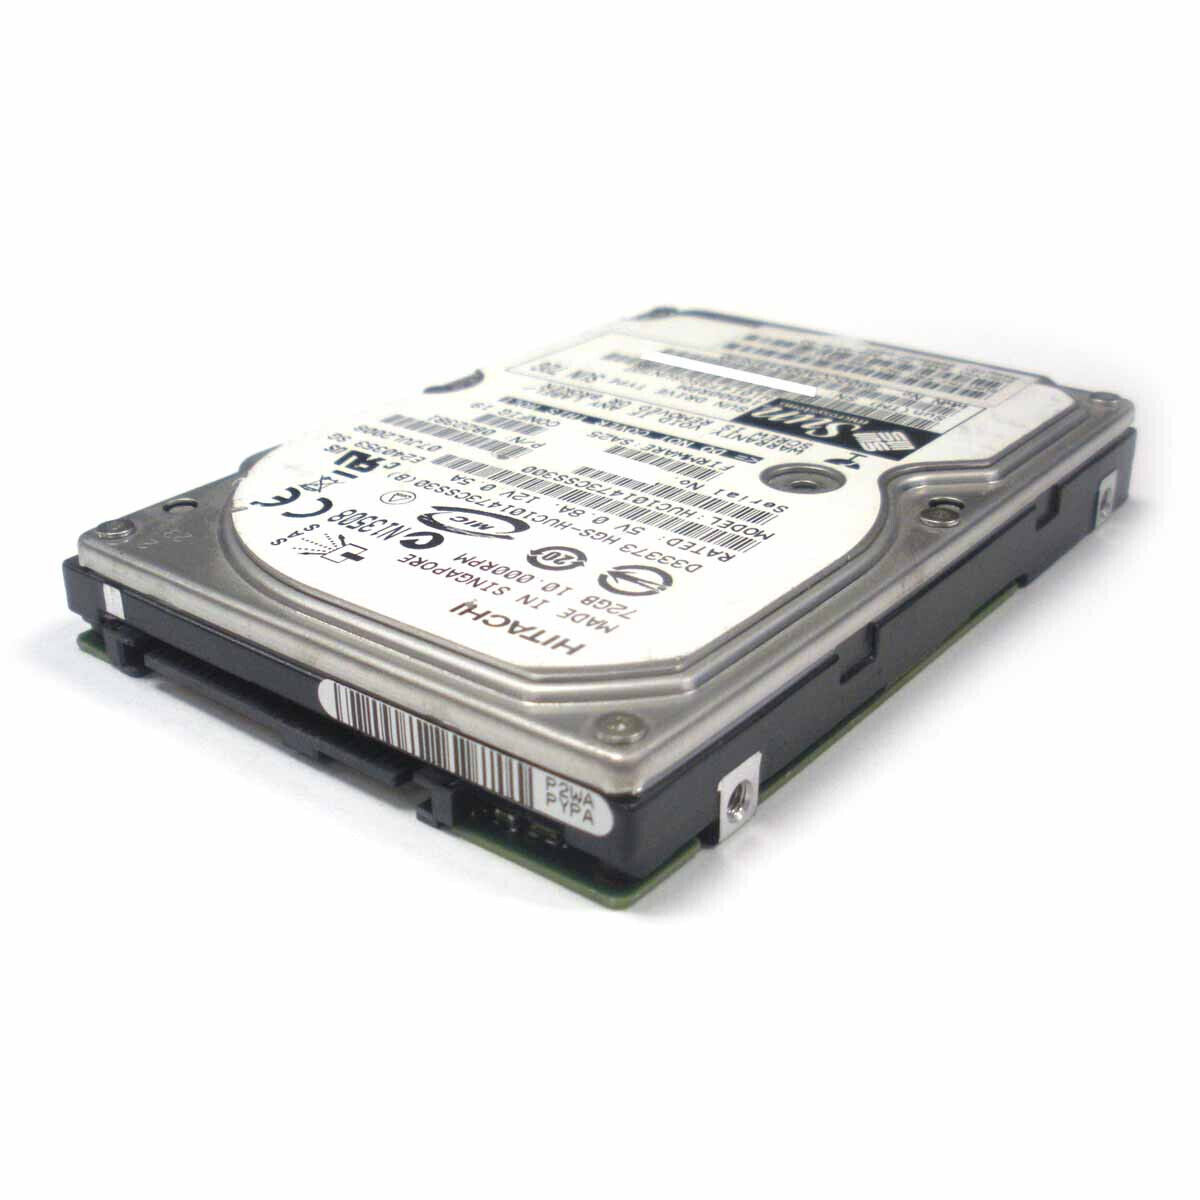 Sun 390-0376 Hard Drive 73GB 10K SAS 2.5in